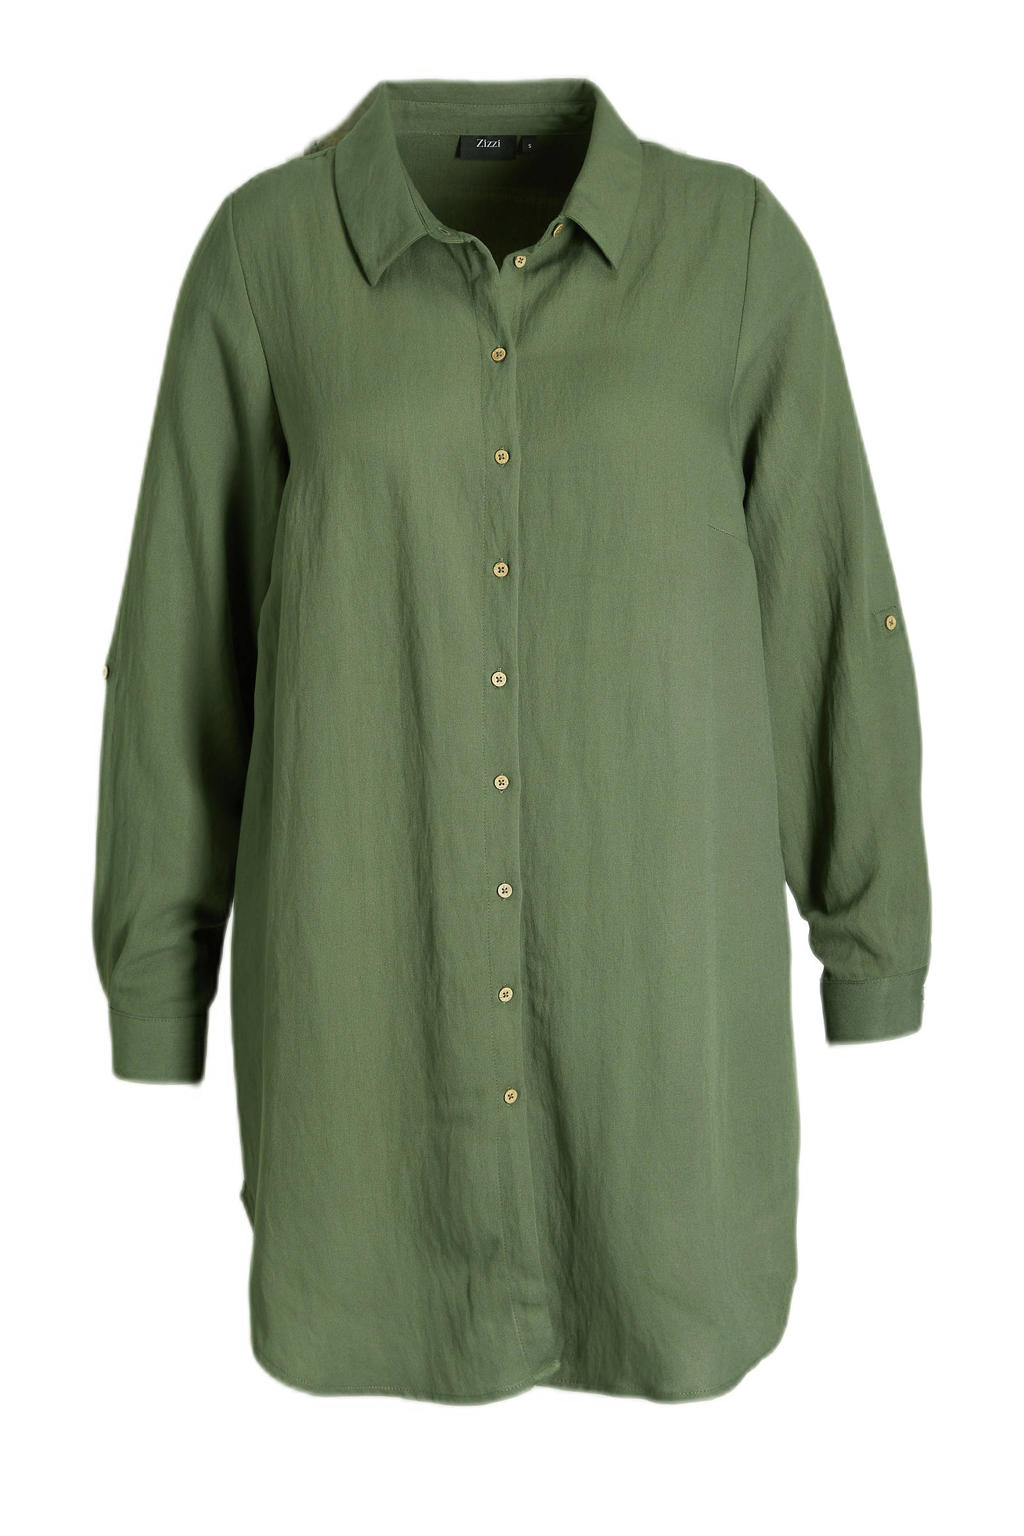 Groene dames Zizzi blouse van viscose met lange mouwen, klassieke kraag en knoopsluiting